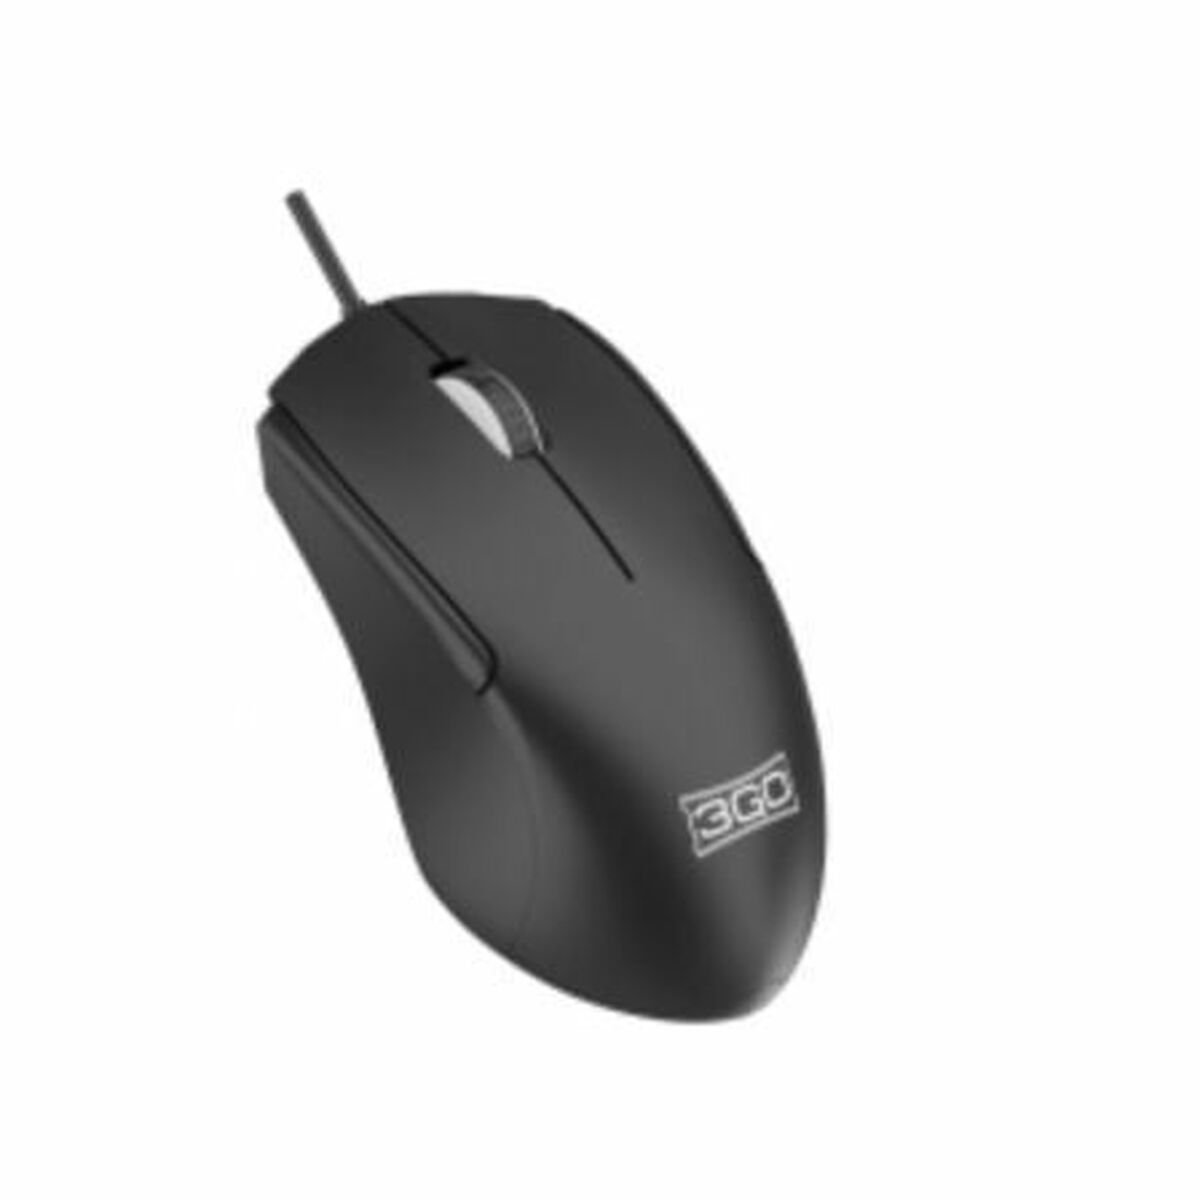 Mouse 3GO MLILO Black 10000 dpi